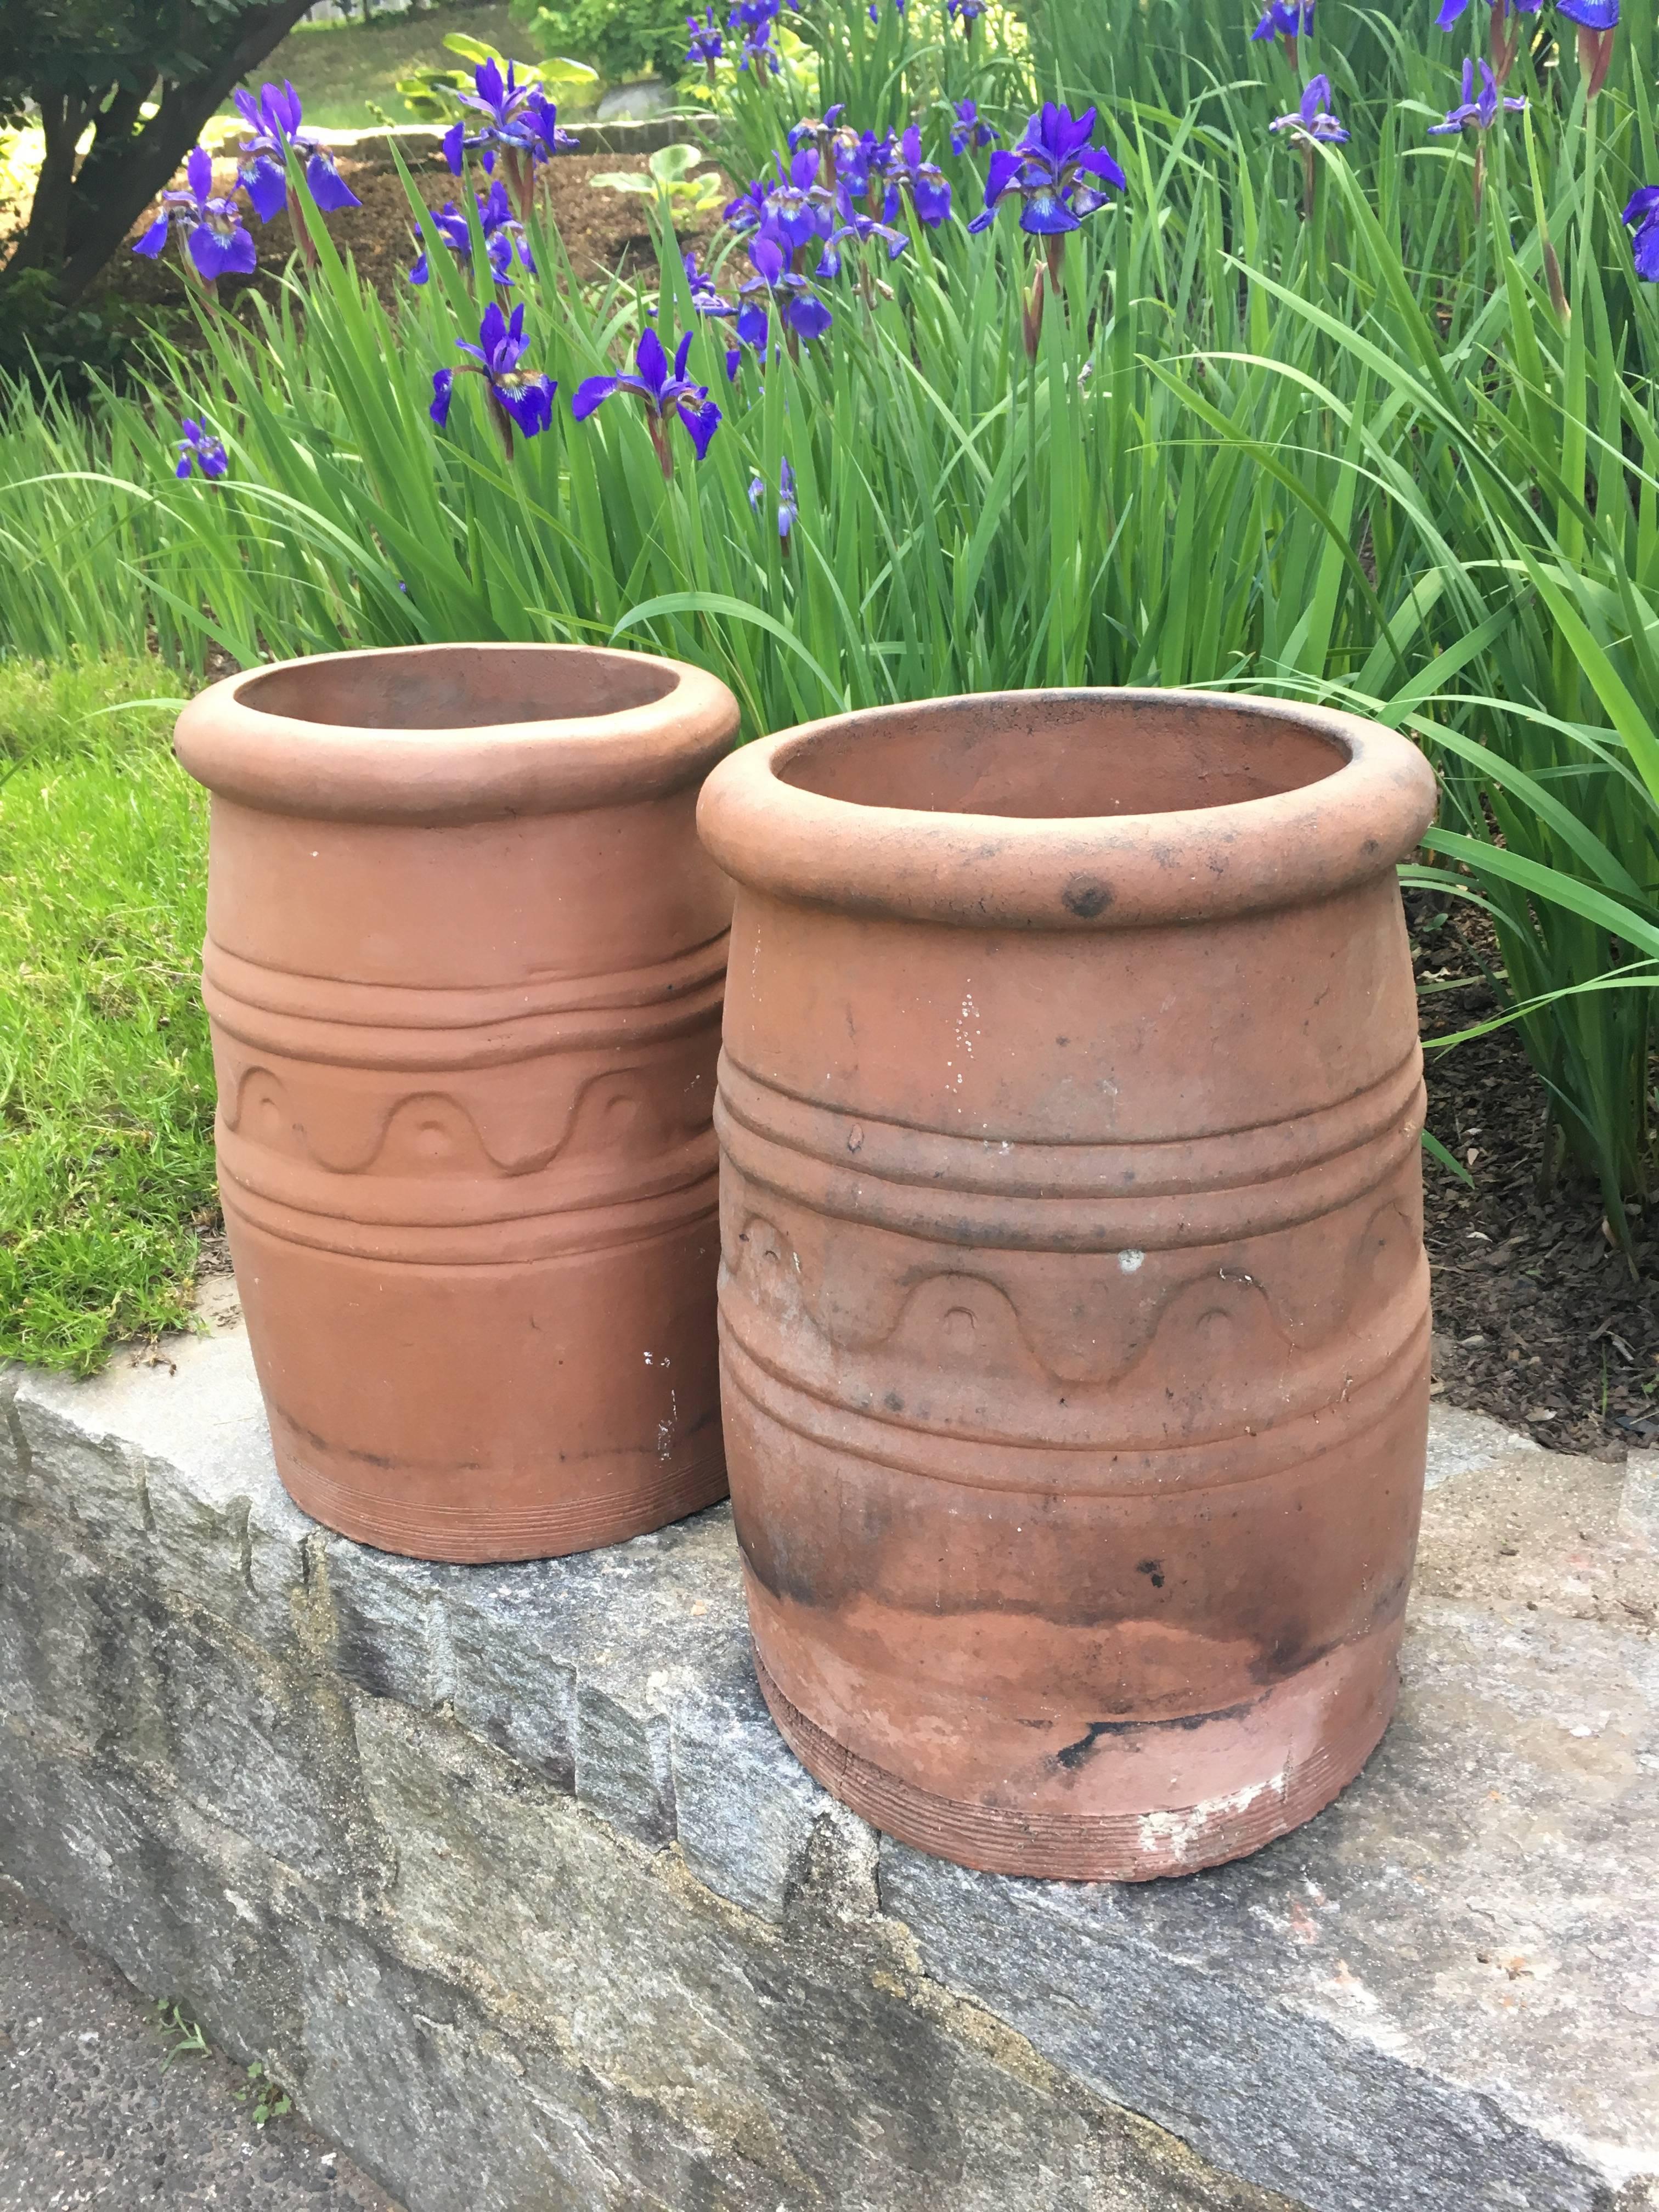 chimney pots as planters